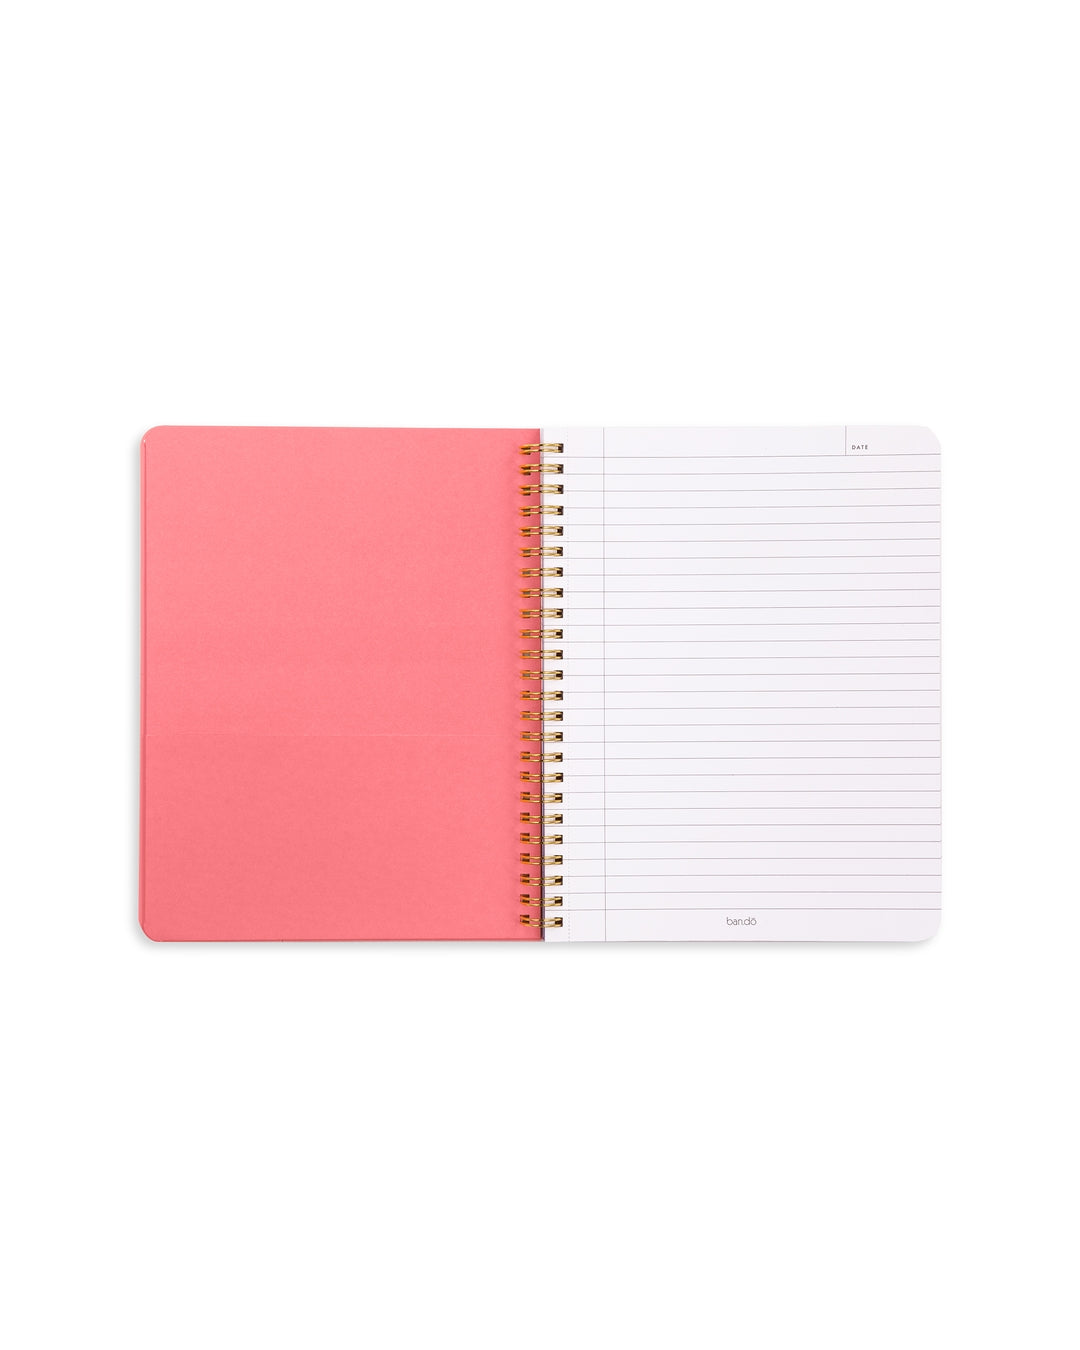 Rough Draft Mini Notebook - Let Me Write That Down [PRE ORDER]